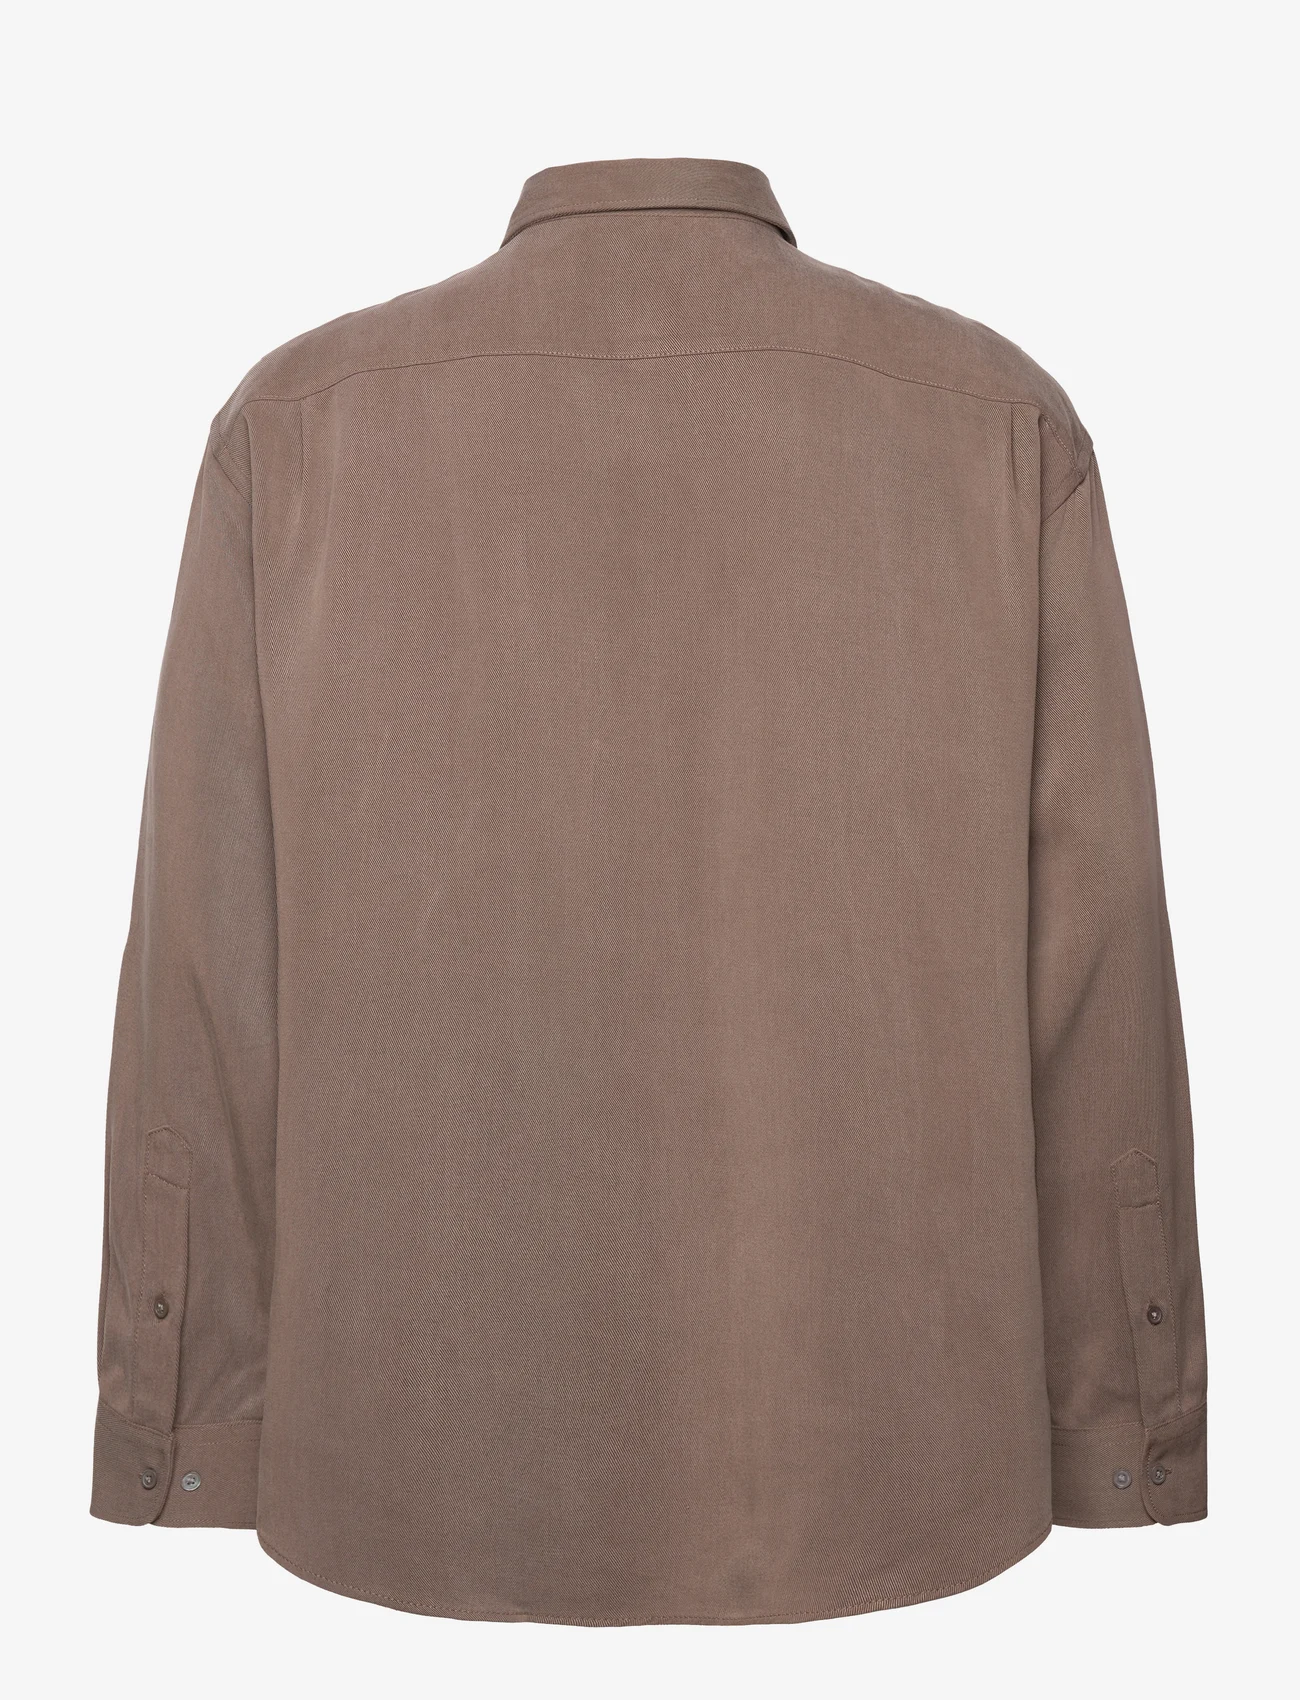 Hope - Oversized Tencel Shirt - peruskauluspaidat - mud brown - 1